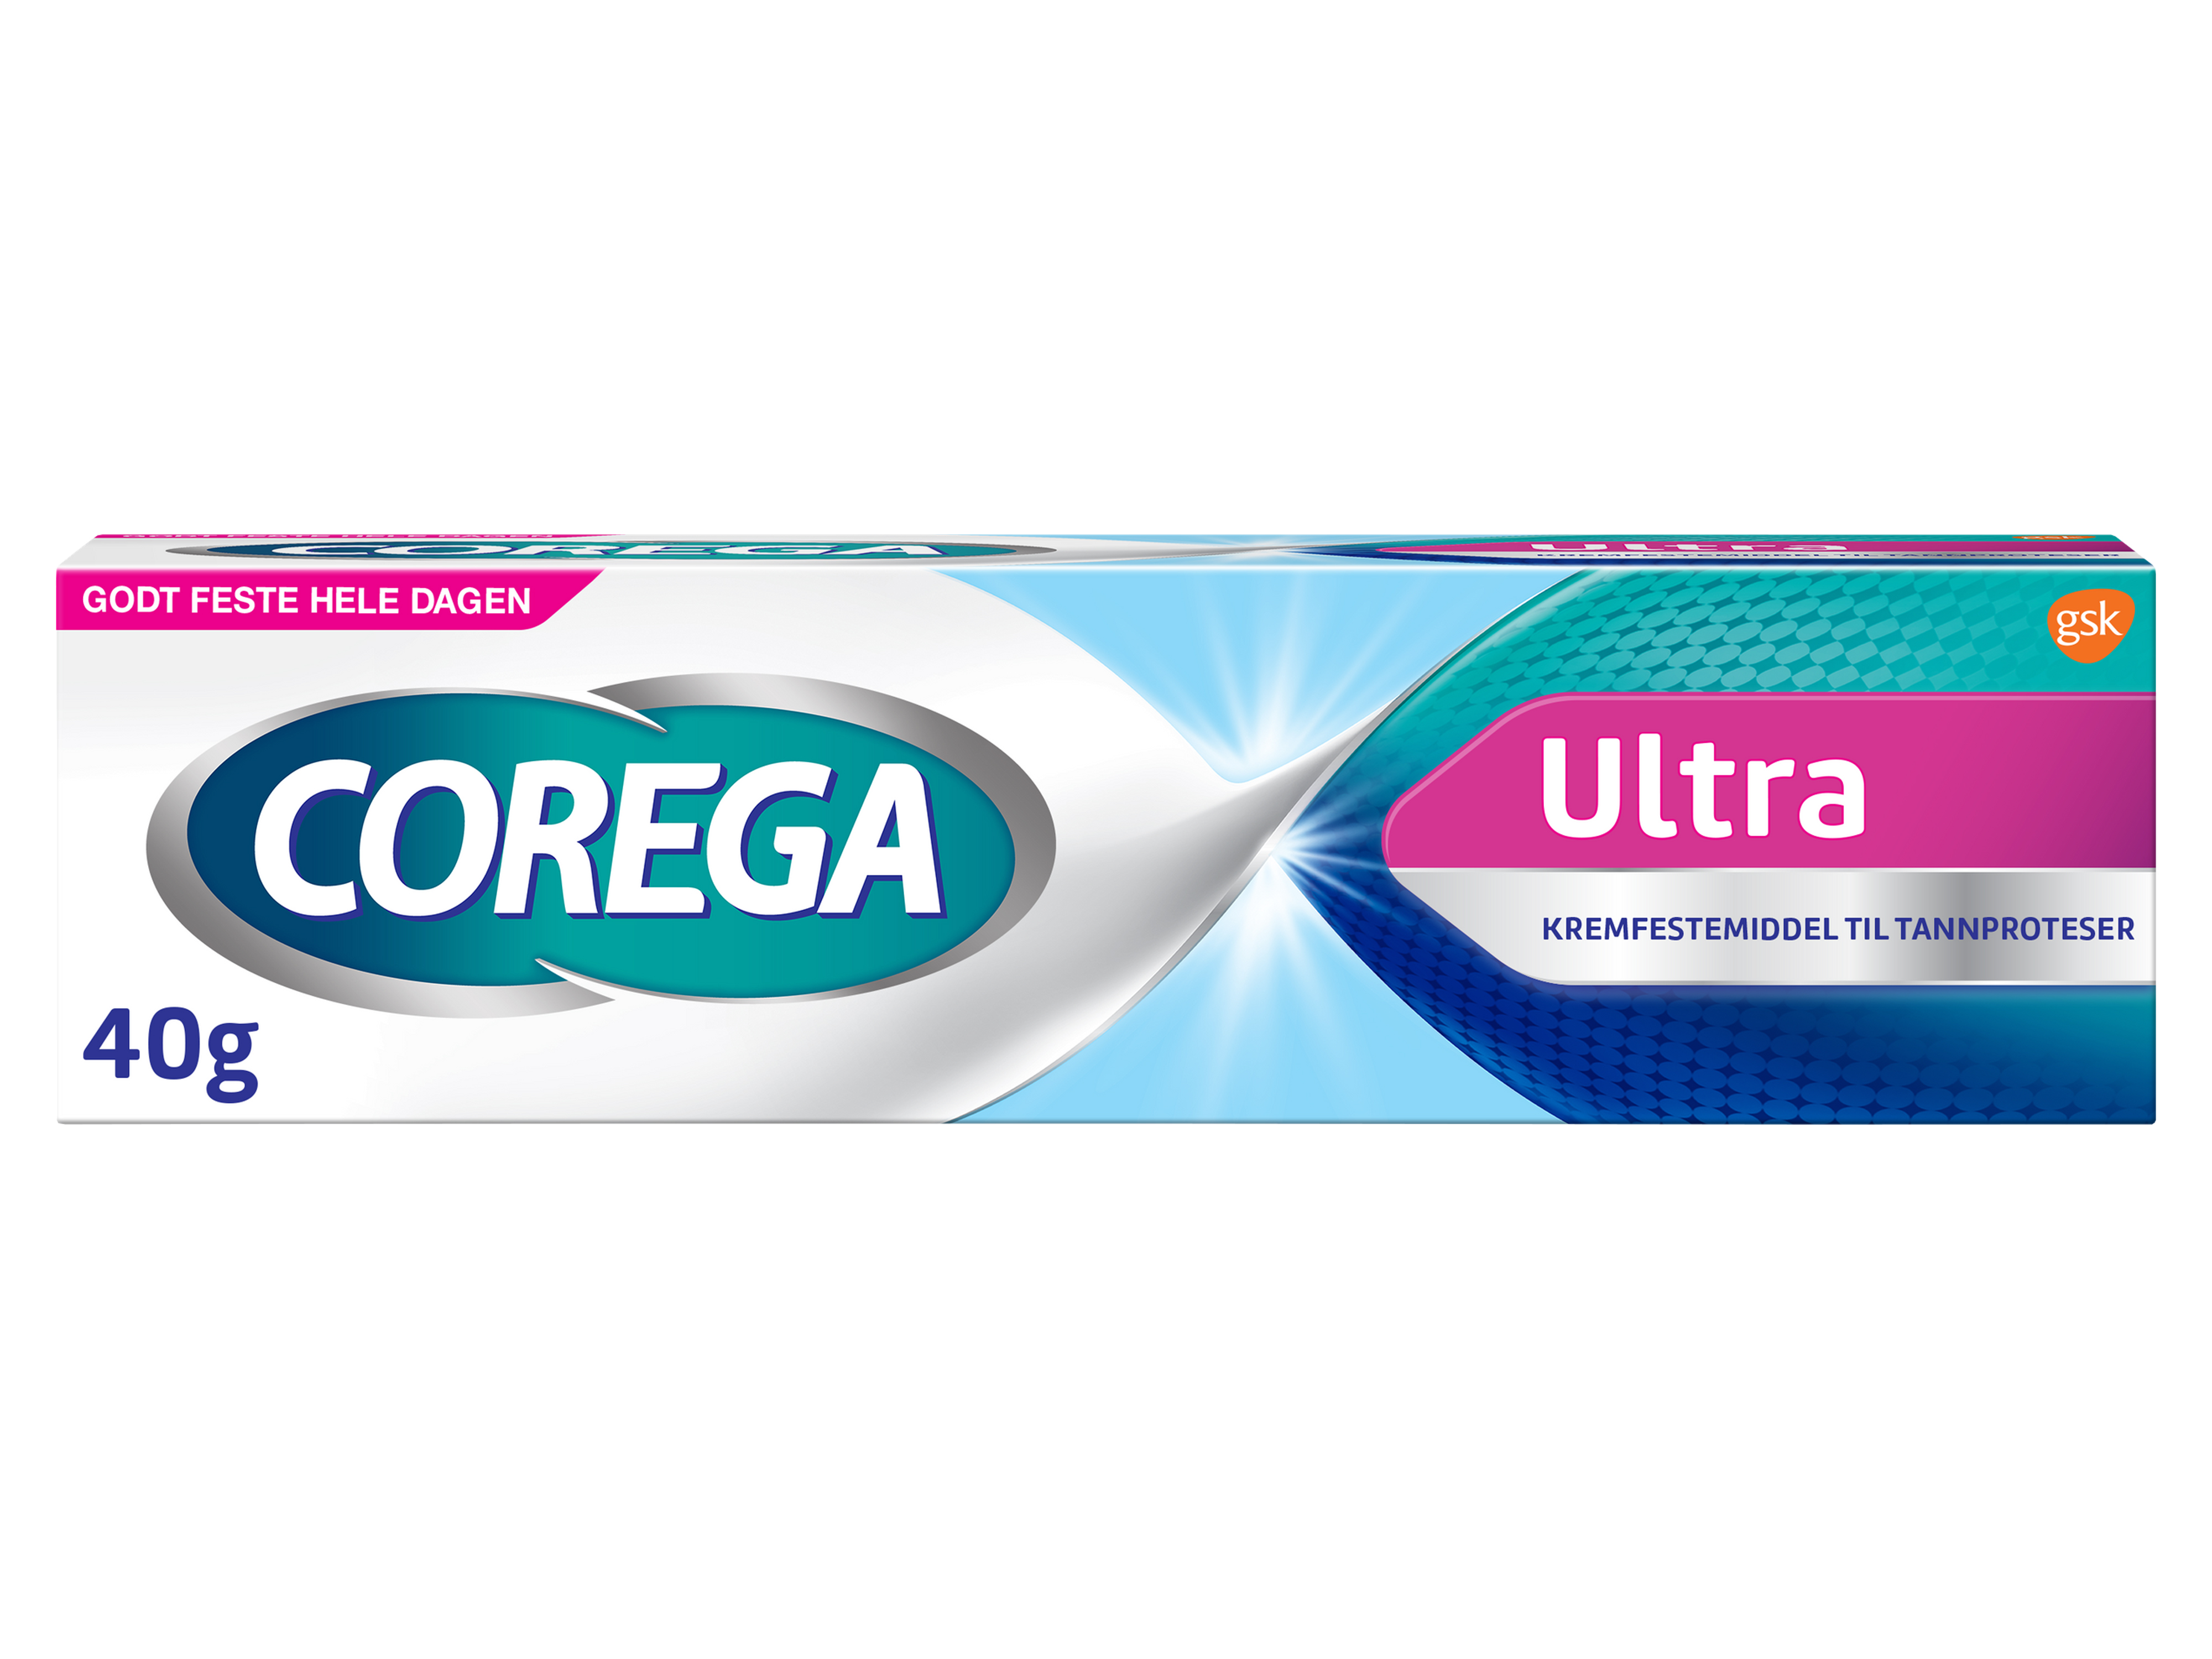 Corega Ultra kremfestemiddel, 40 g